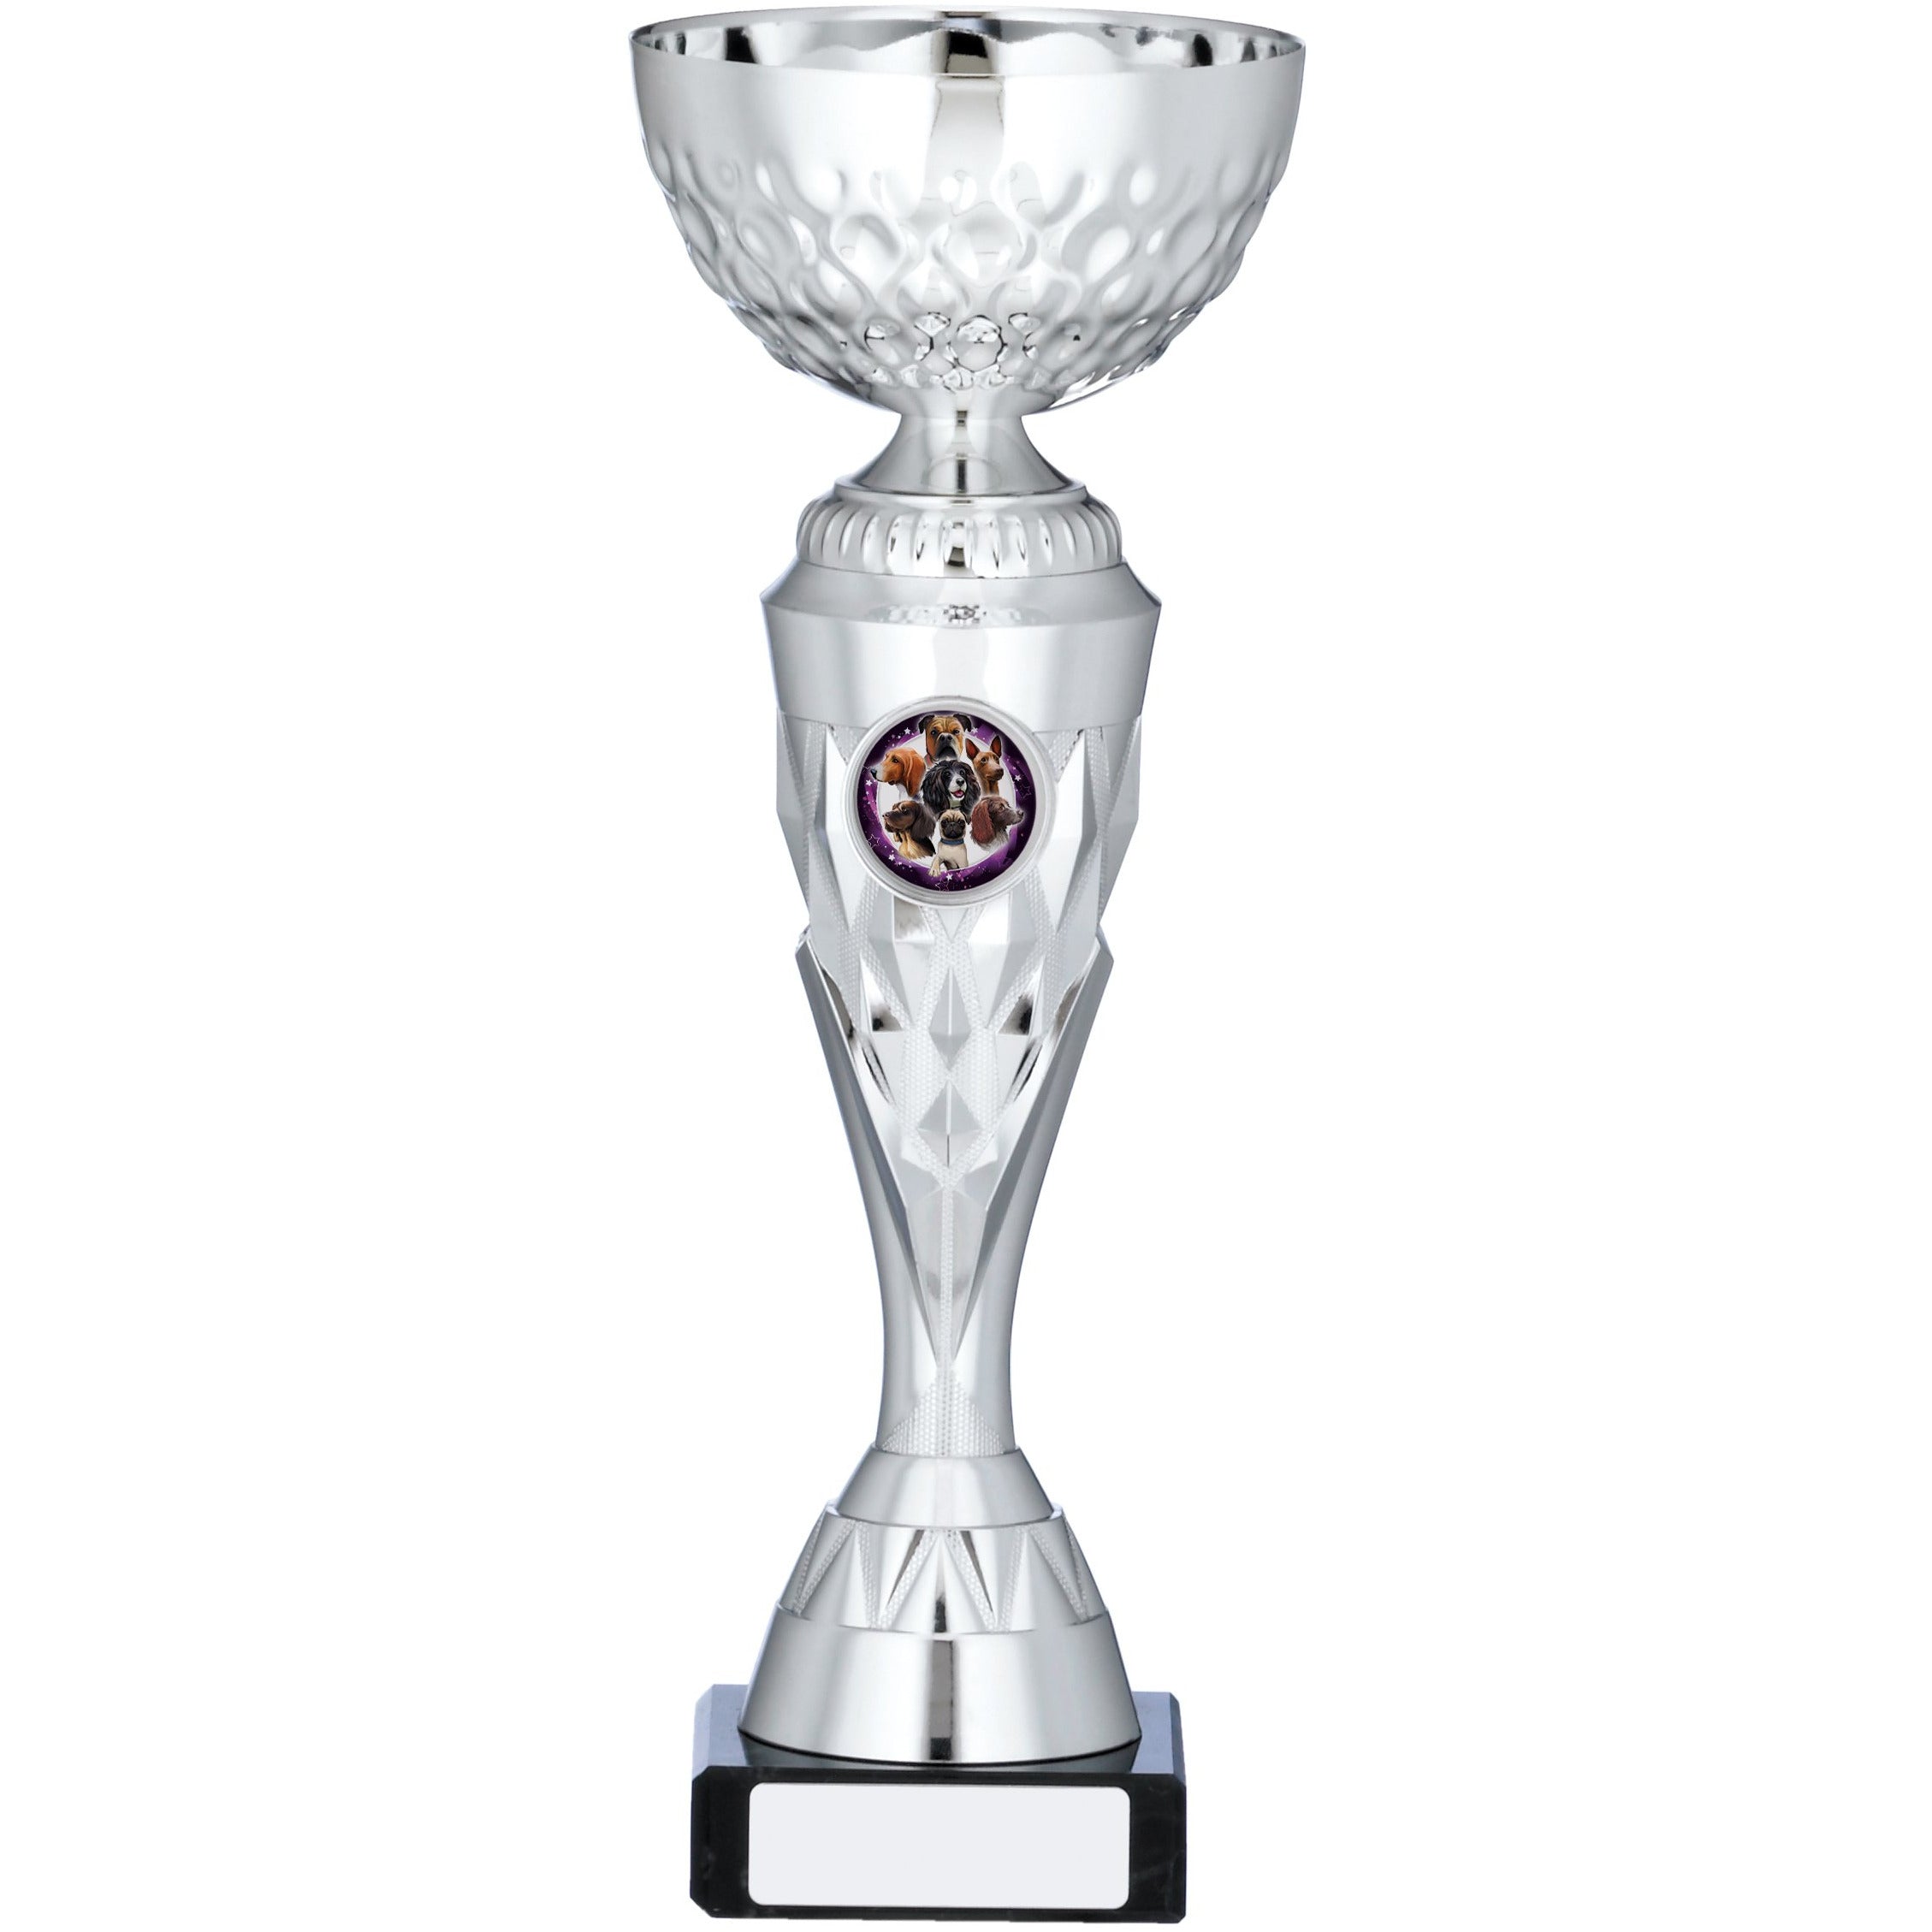 Slender Silver Trophy Cup